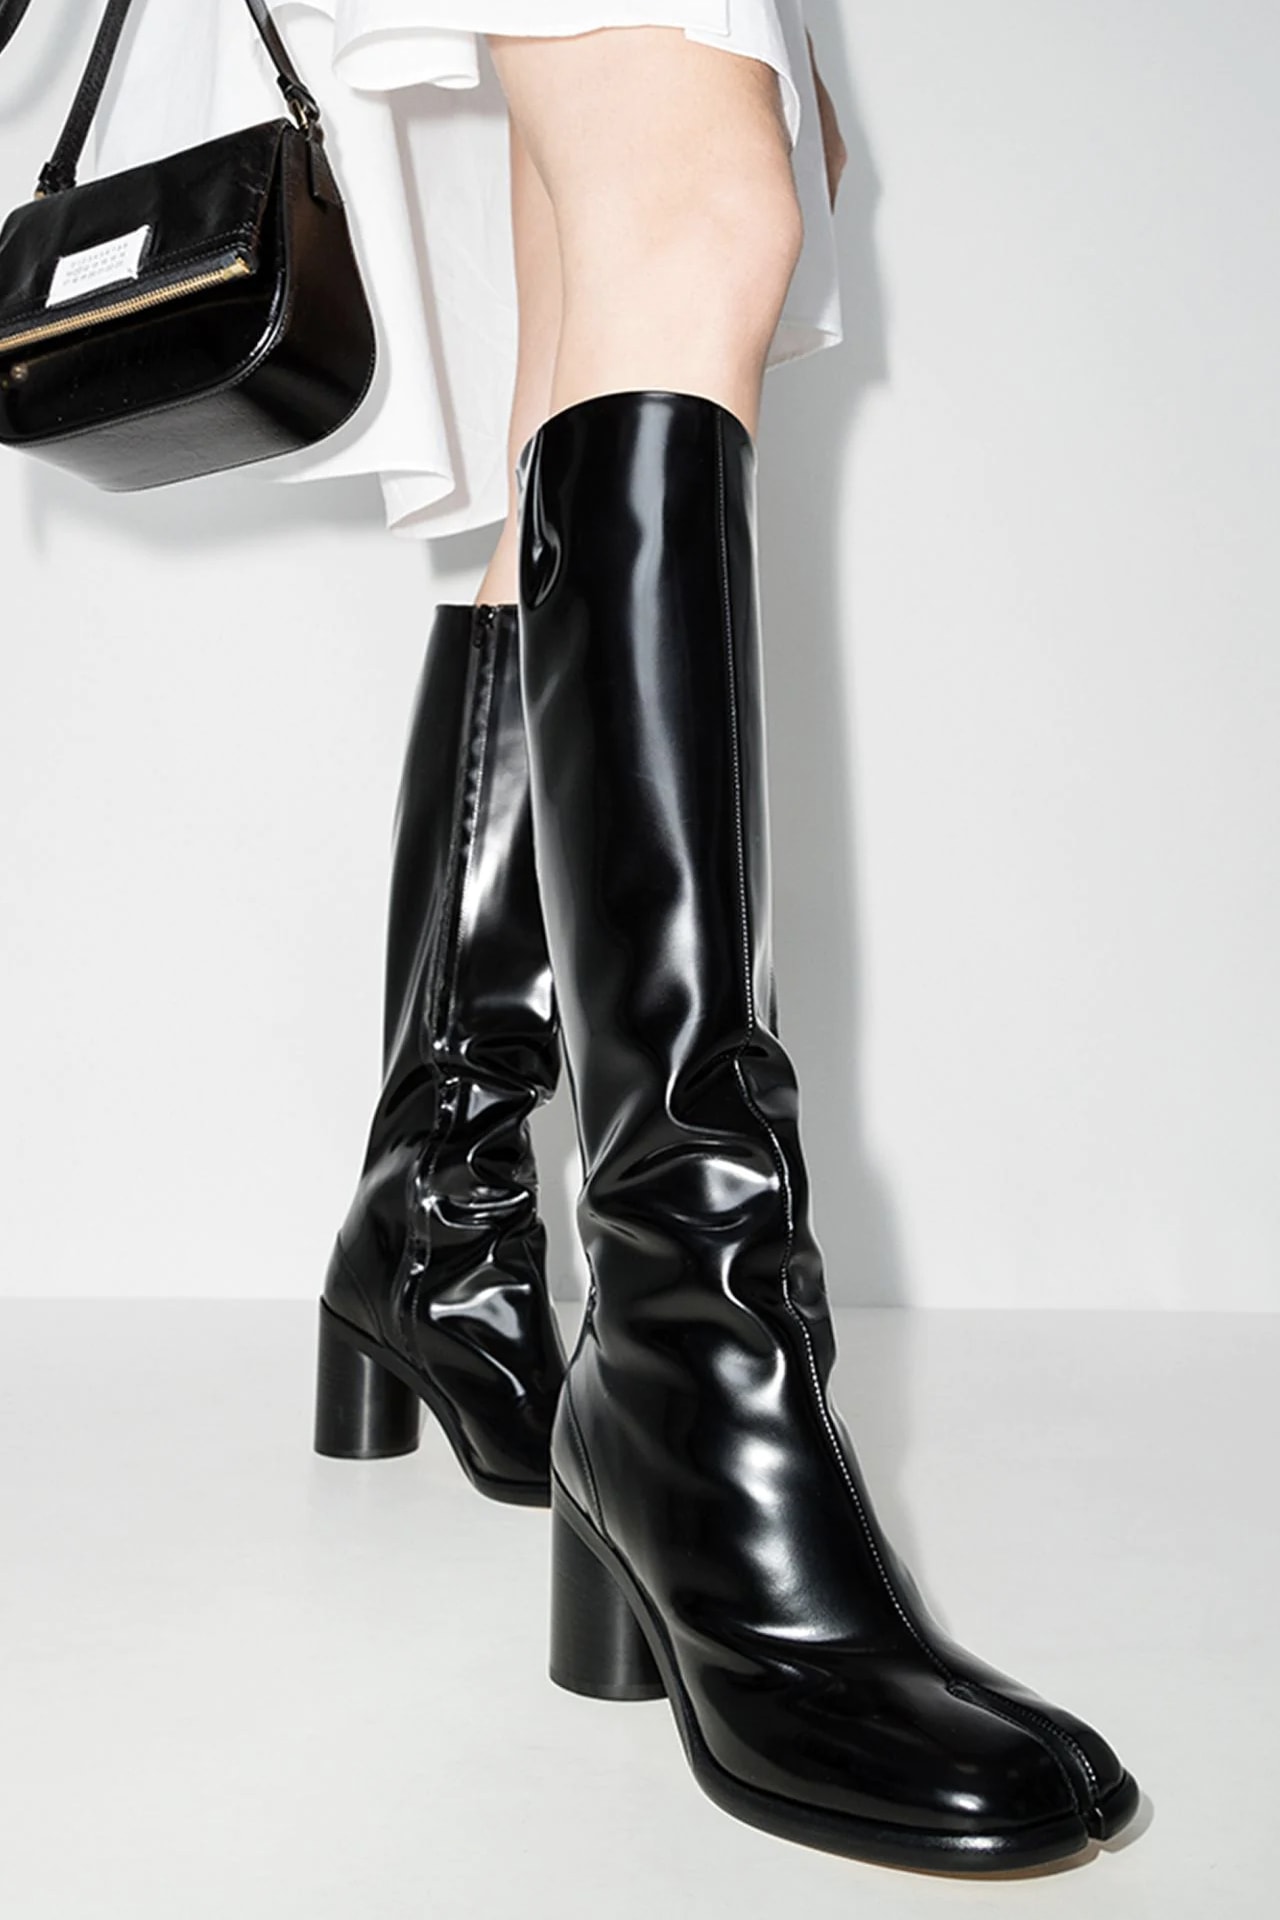 Maison Margiela Knee-High Tabi Boot Patent Leather